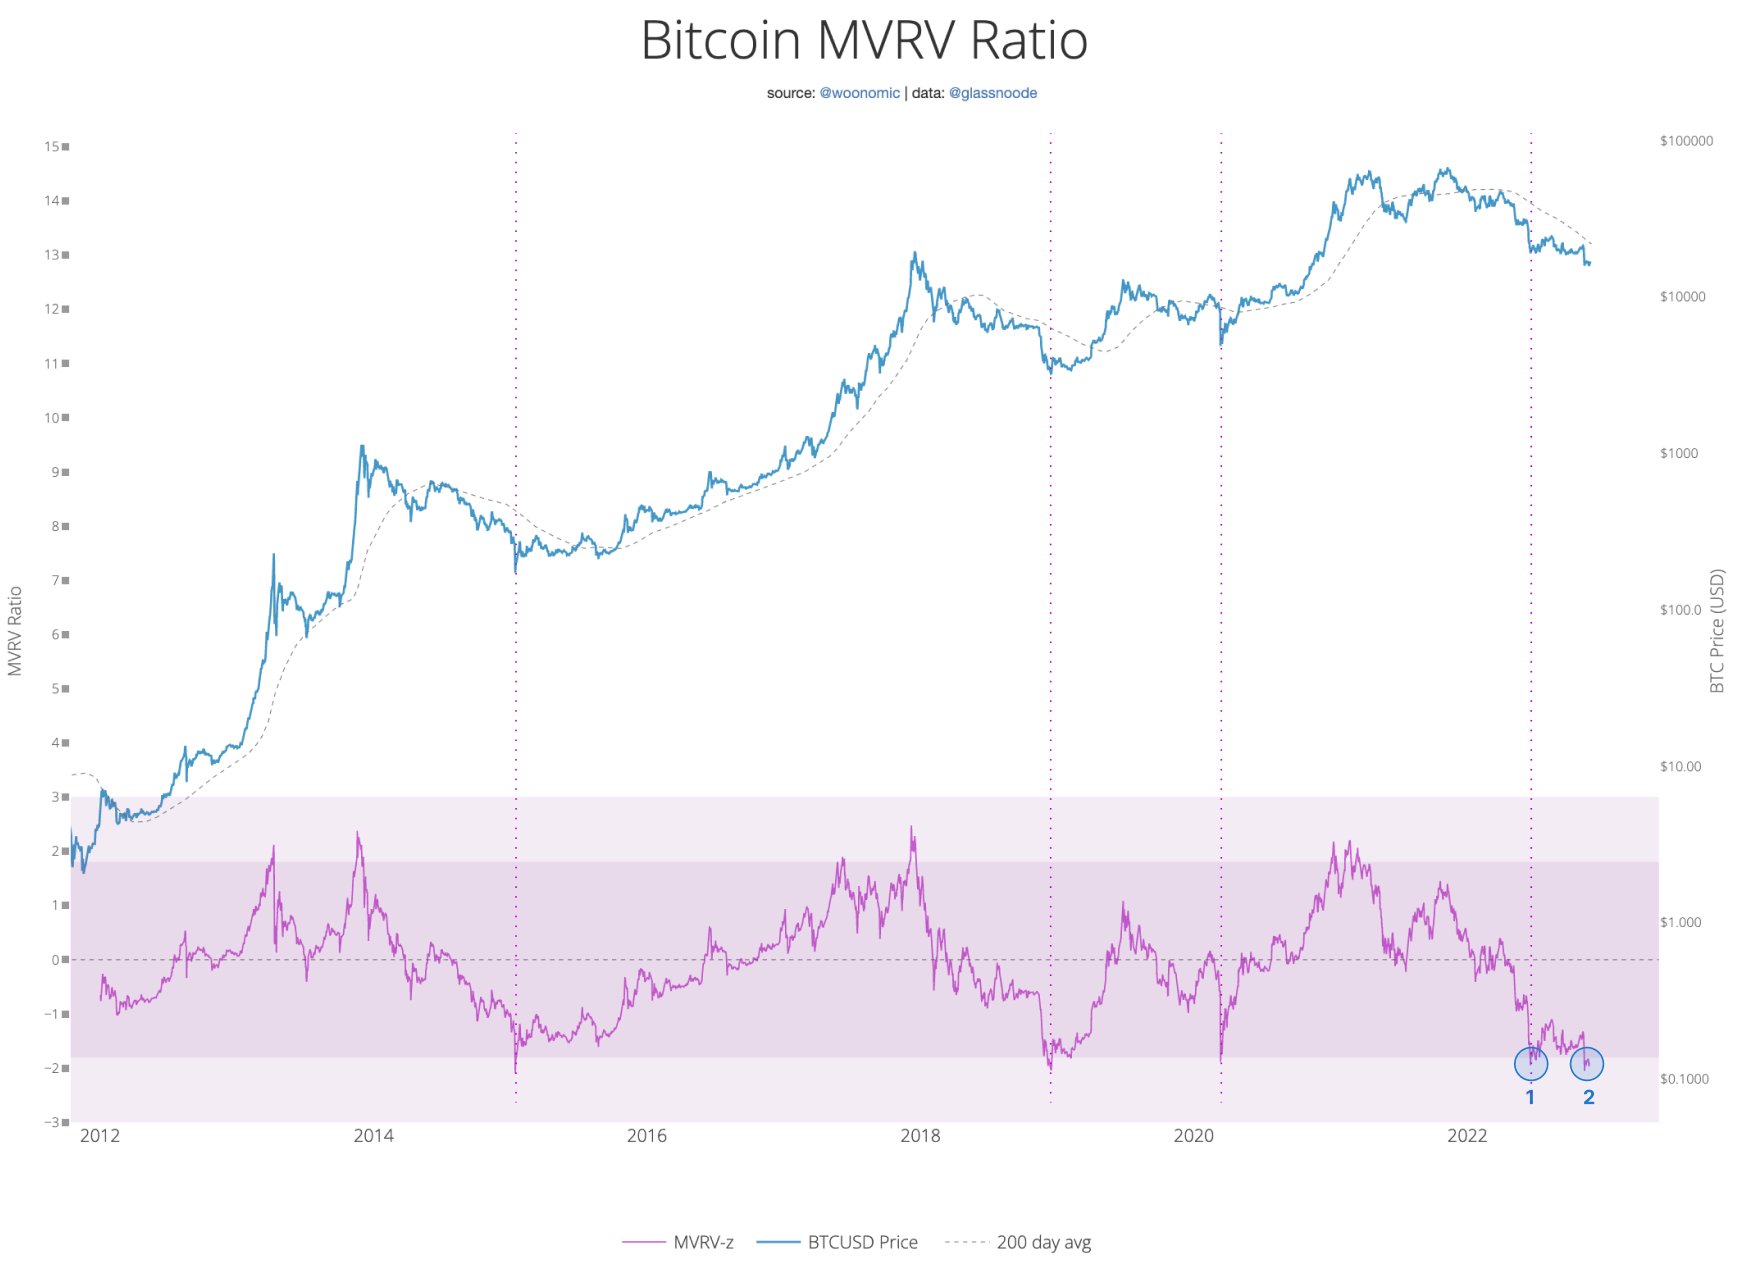 Bitcoin MVRV ratio